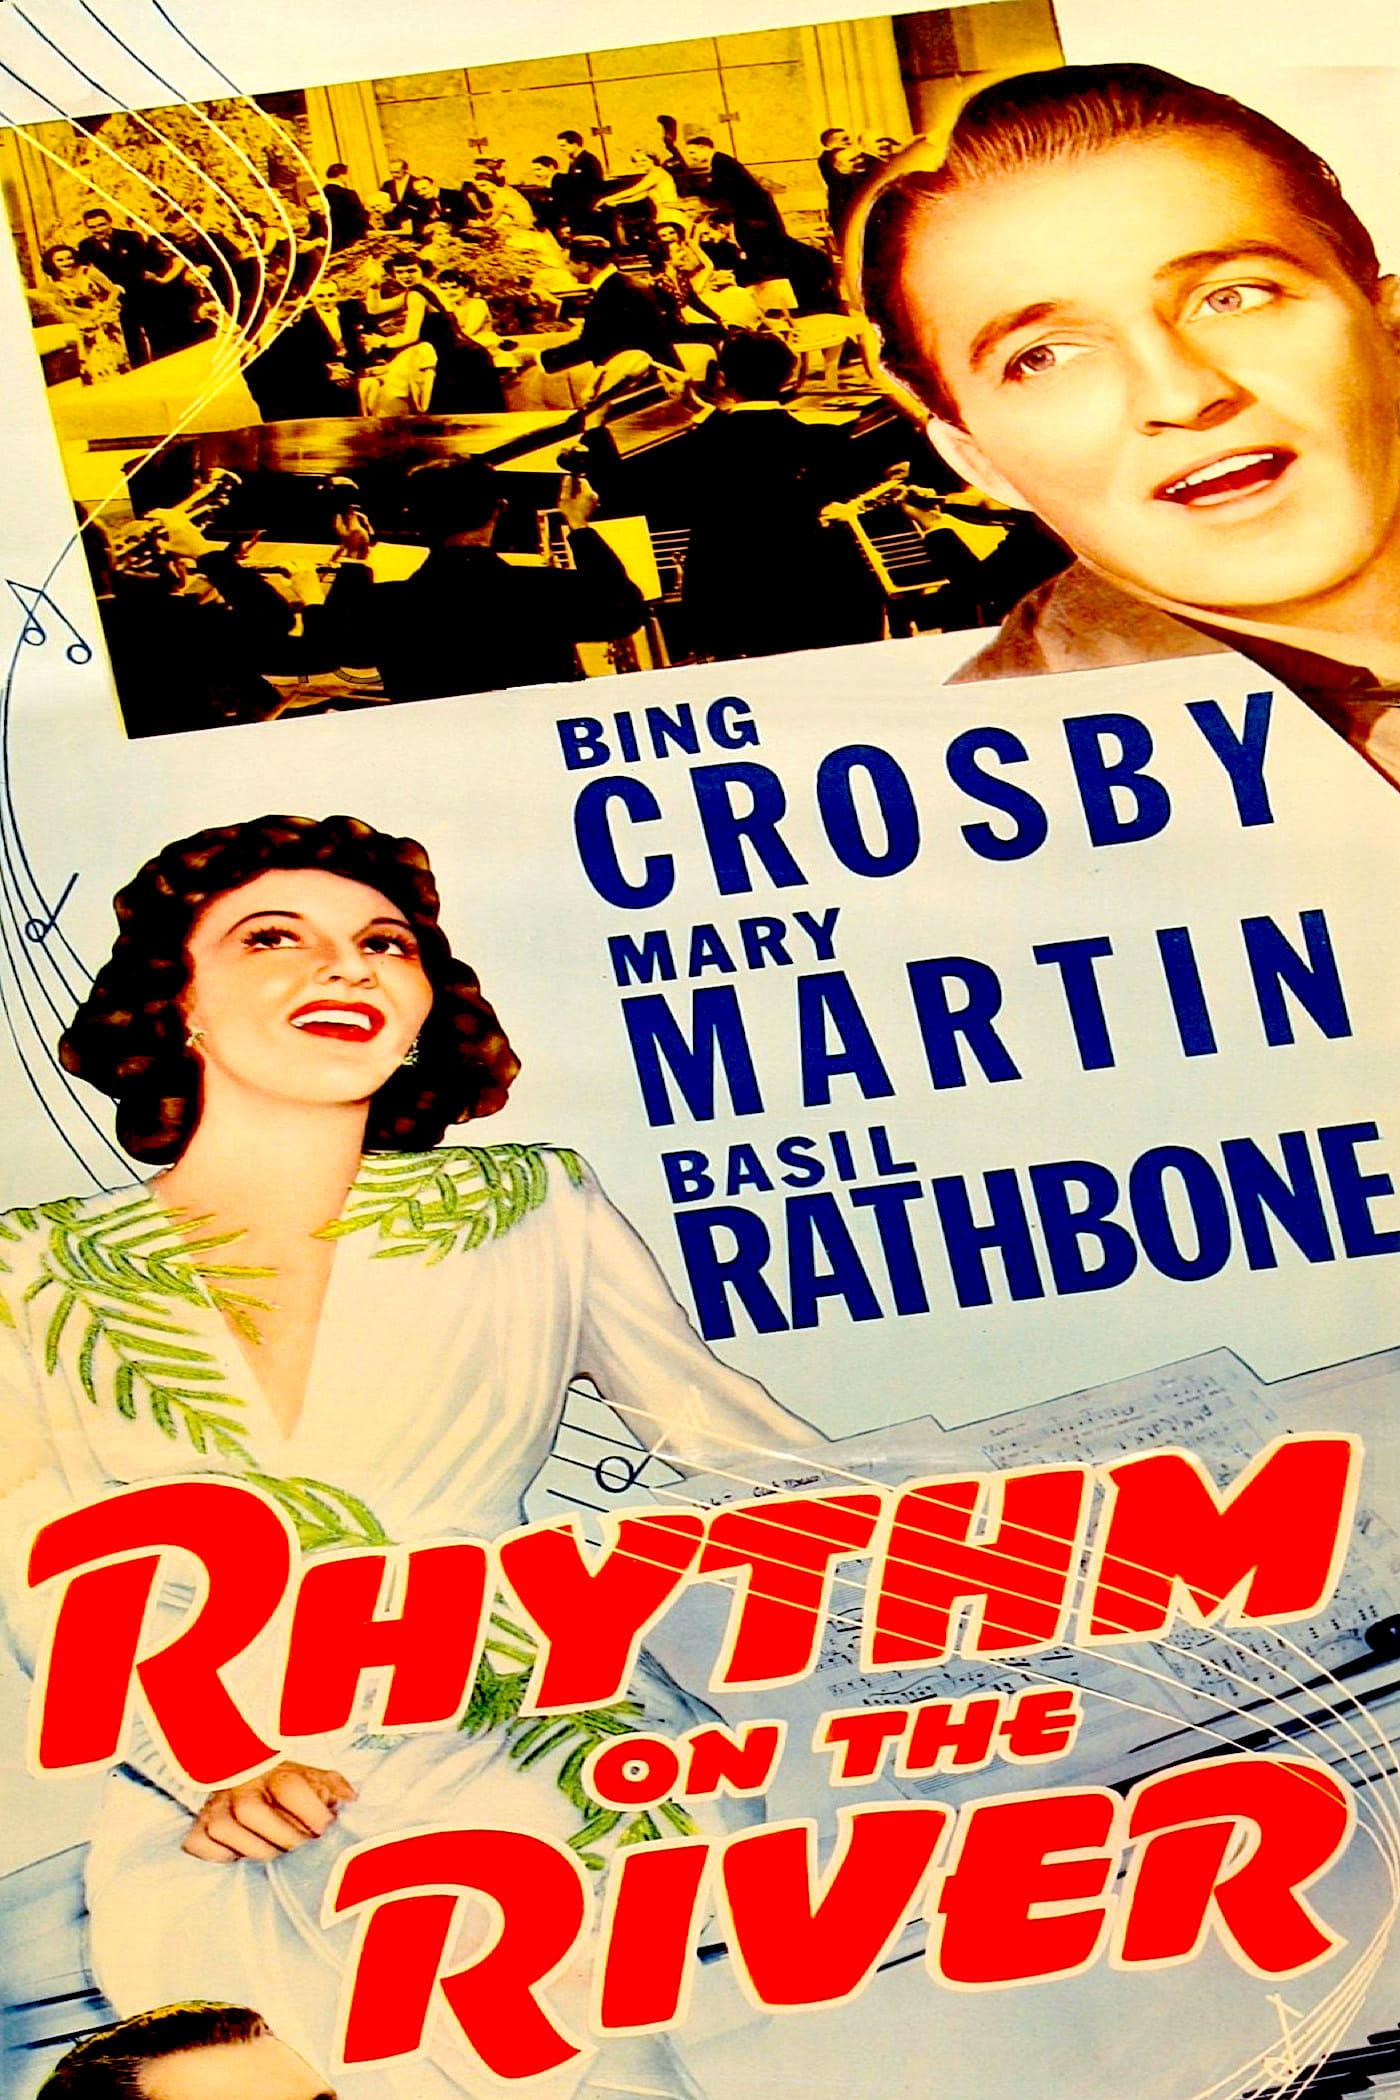 Rhythm on the River poster